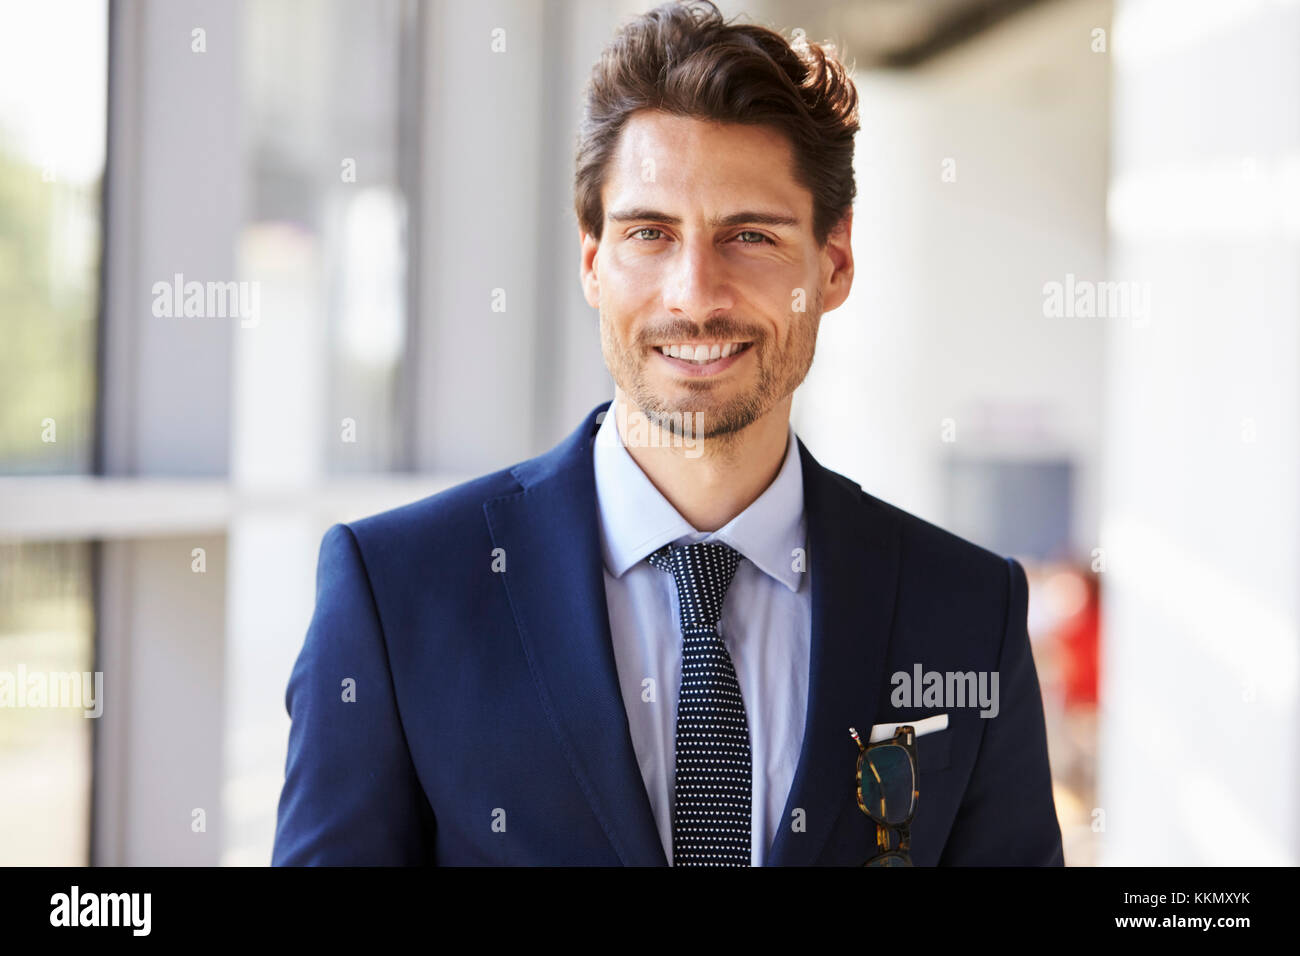 Portrait of smiling young man in suit professionnel Banque D'Images